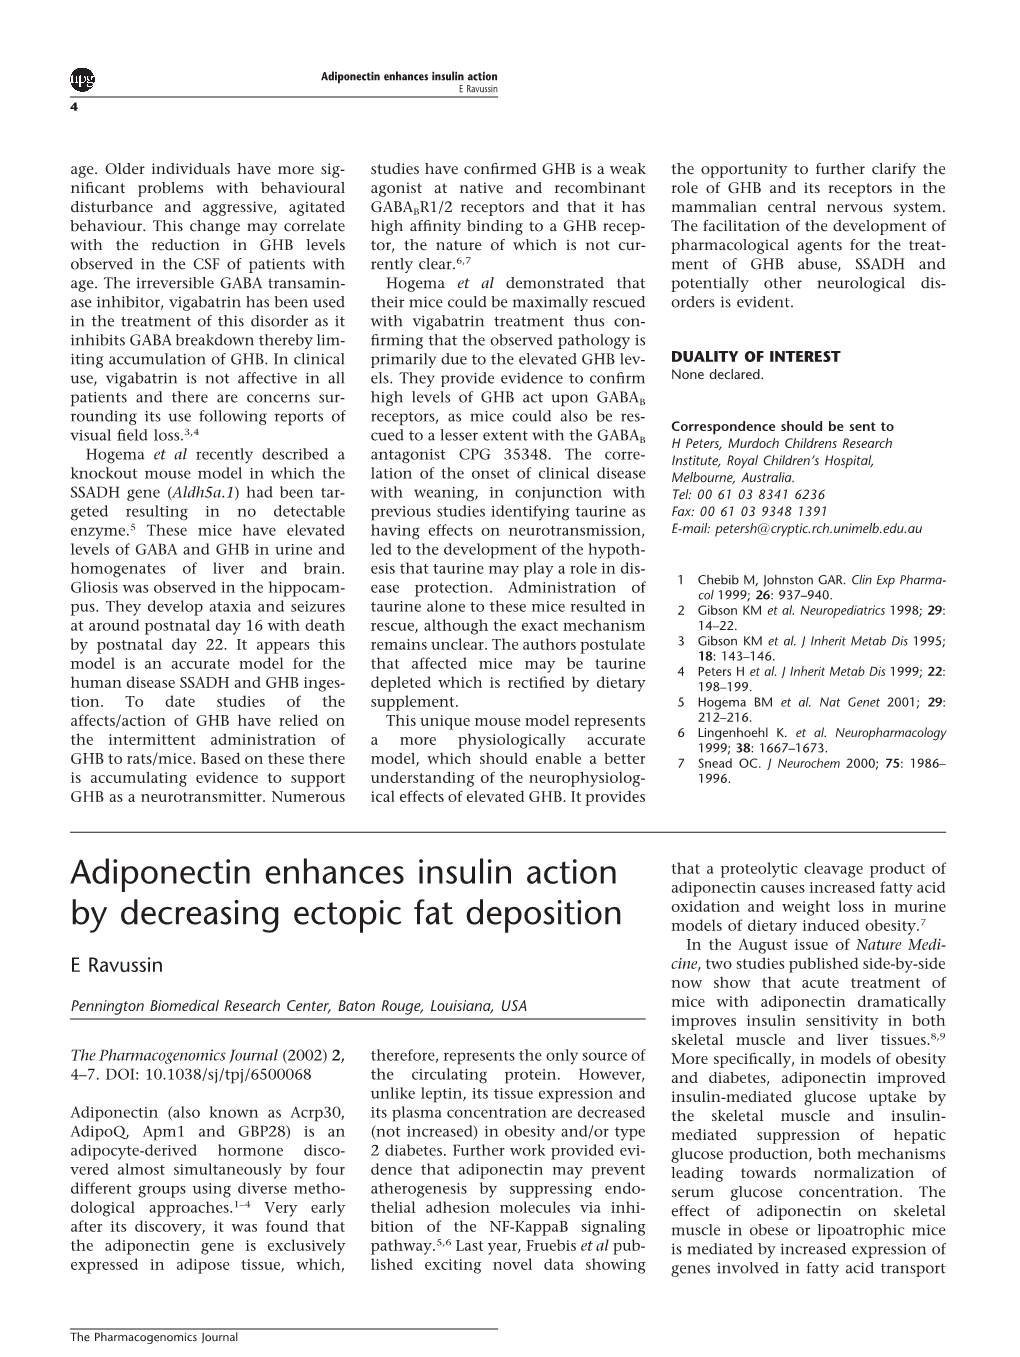 Adiponectin Enhances Insulin Action by Decreasing Ectopic Fat Deposition